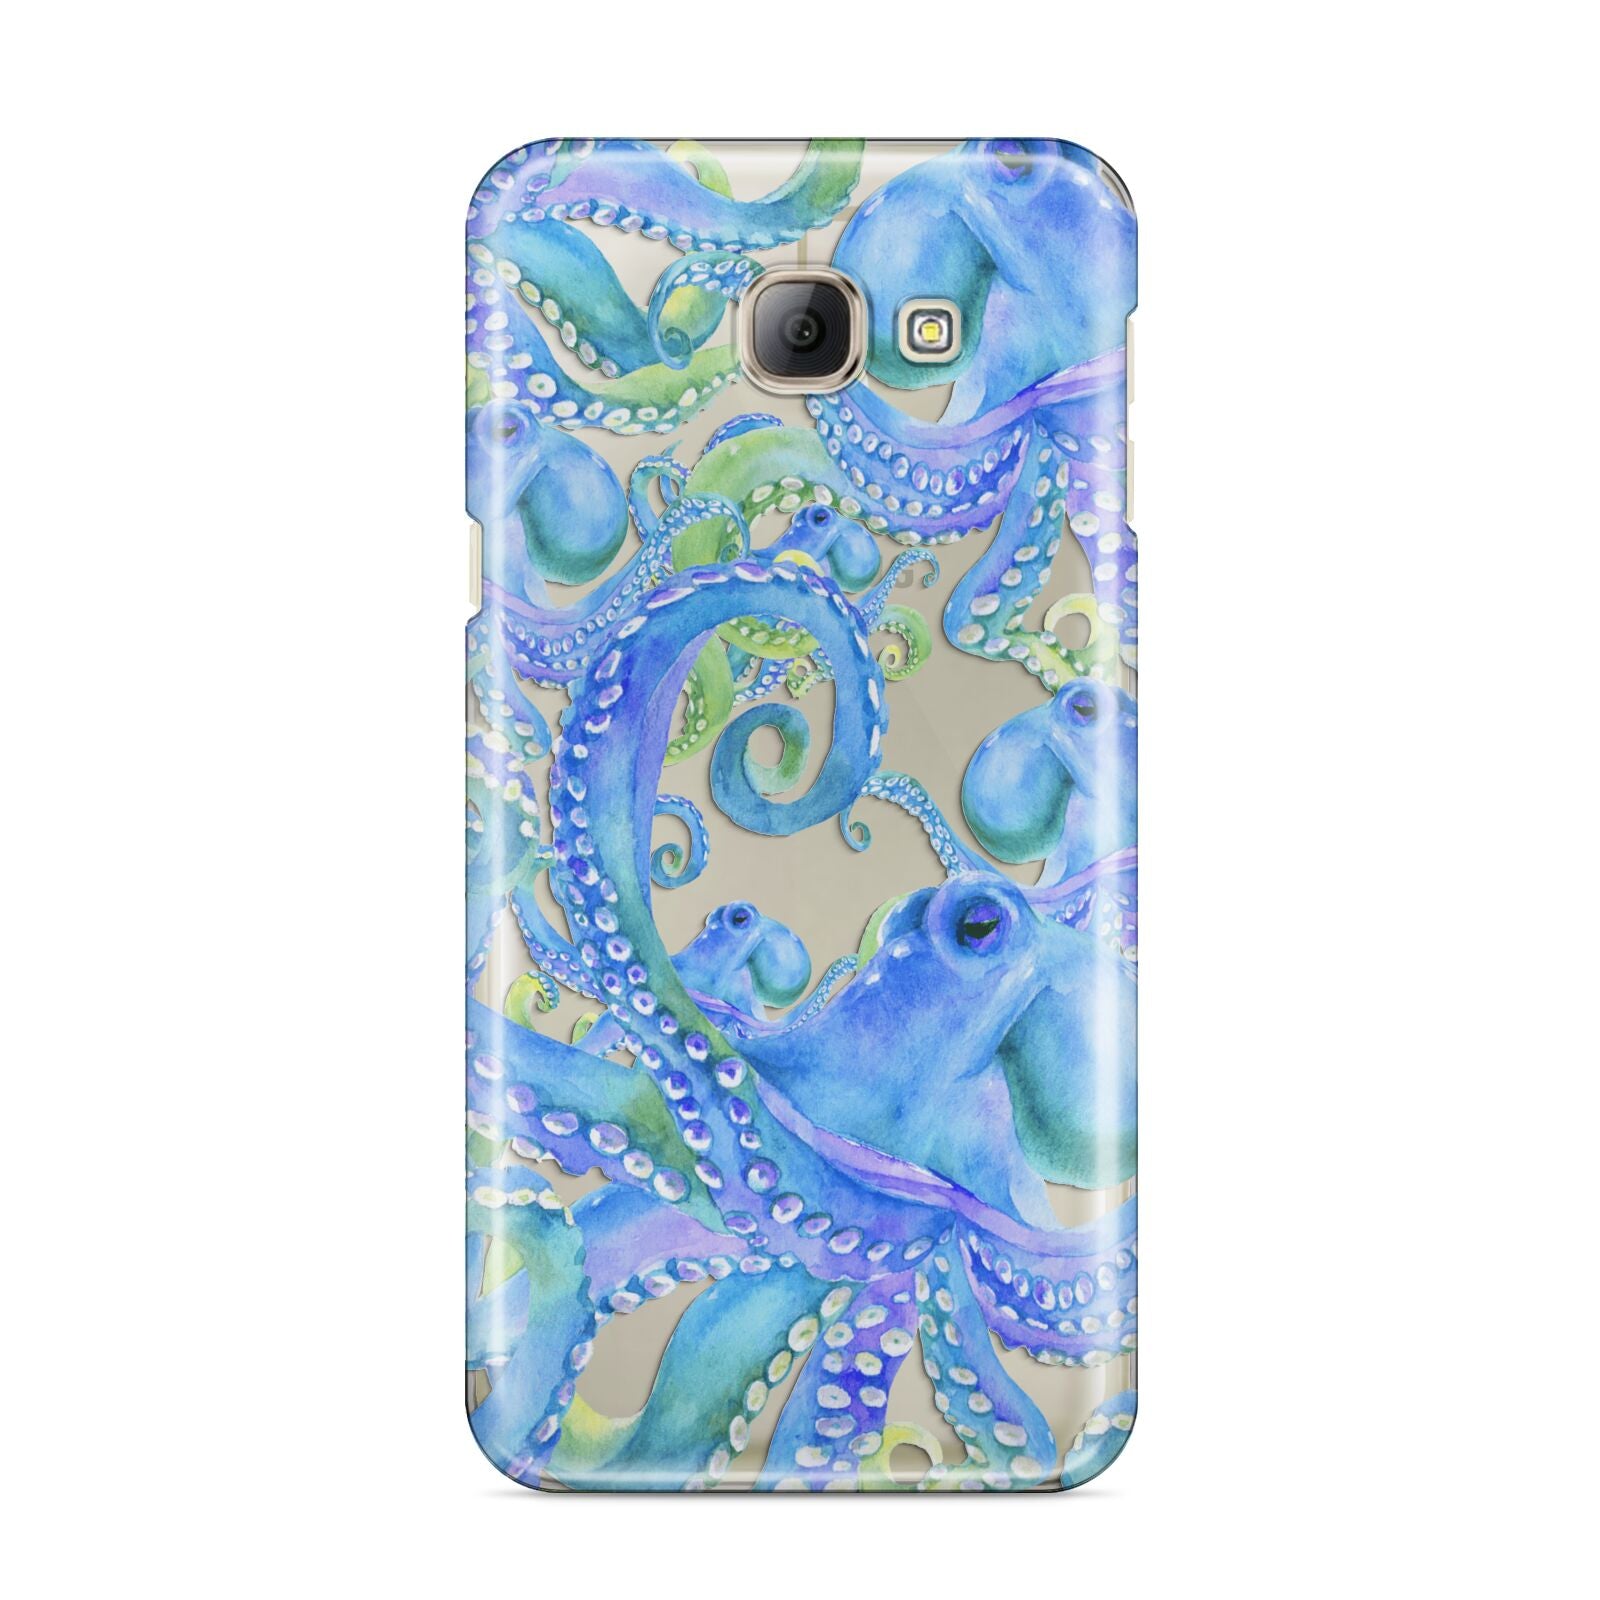 Octopus Samsung Galaxy A8 2016 Case